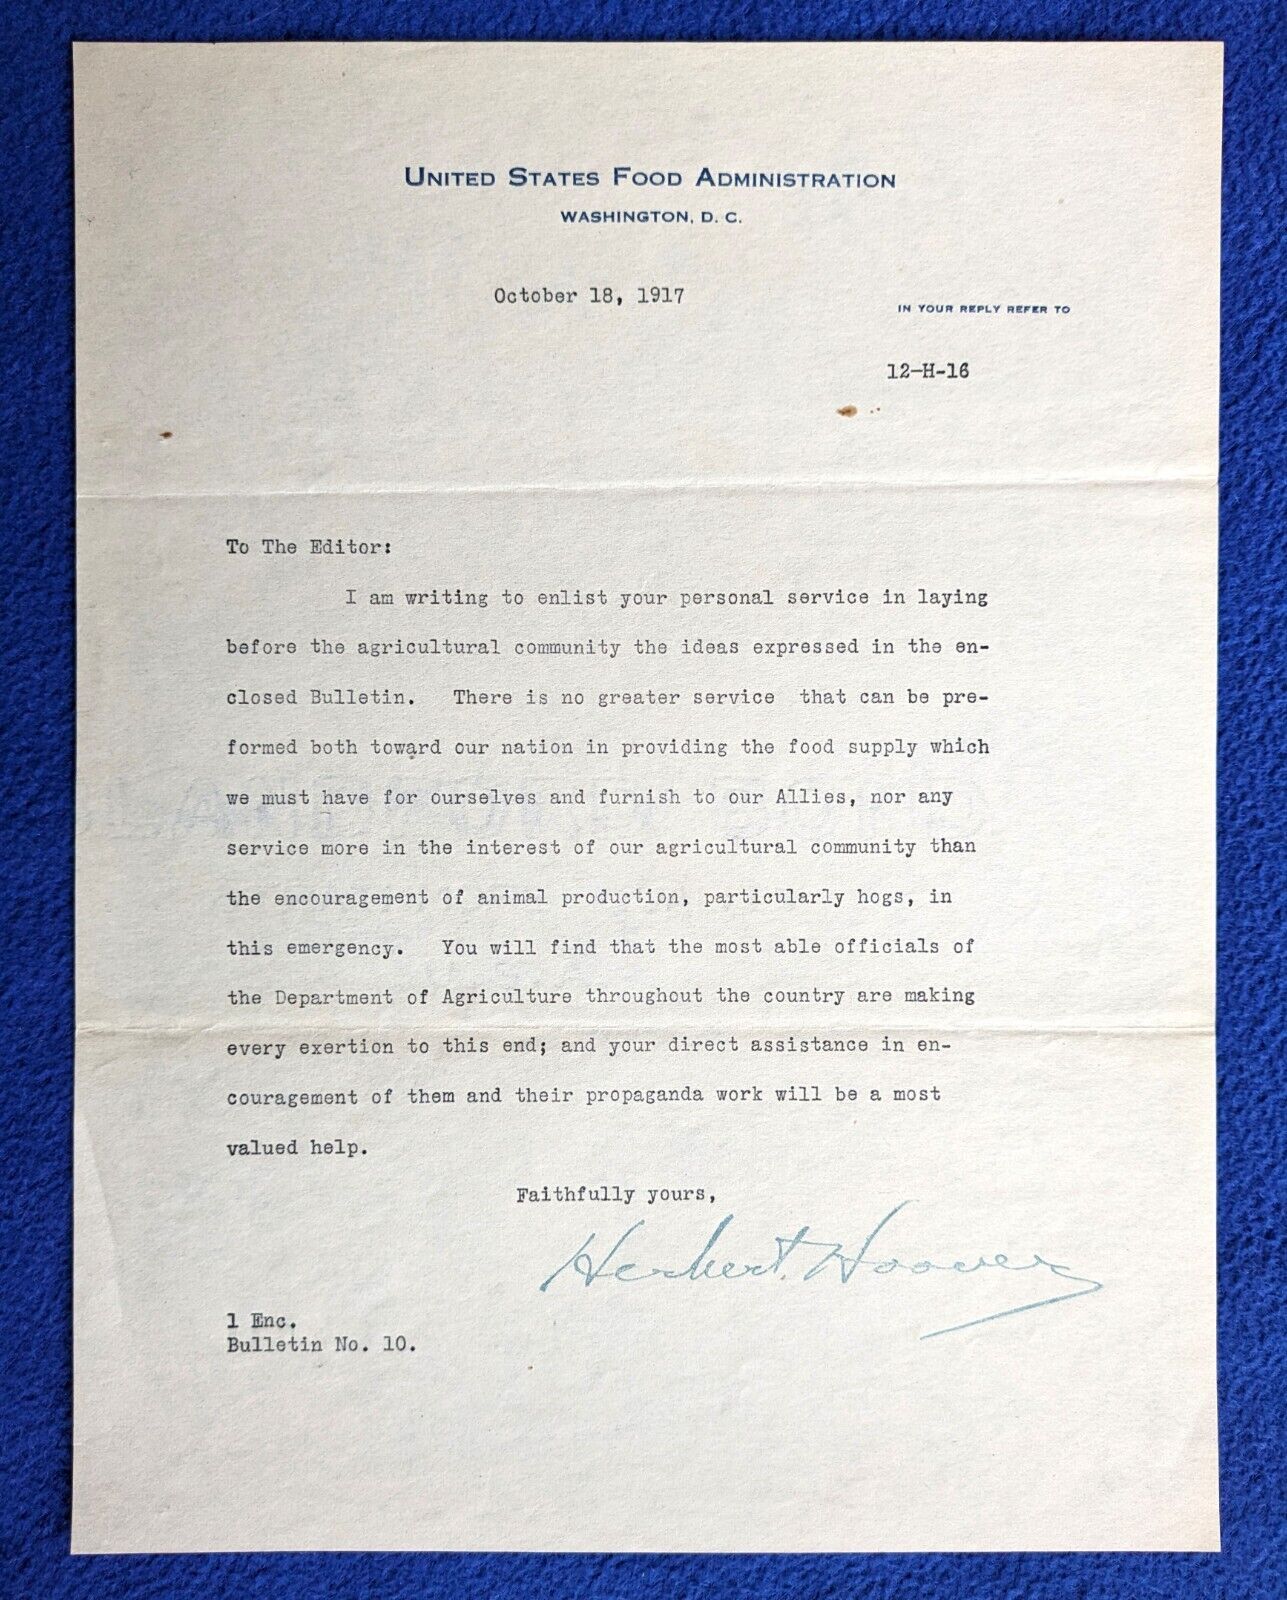 Herbert Hoover Signed Oct. 1917 letter as U.S. Food Administration director